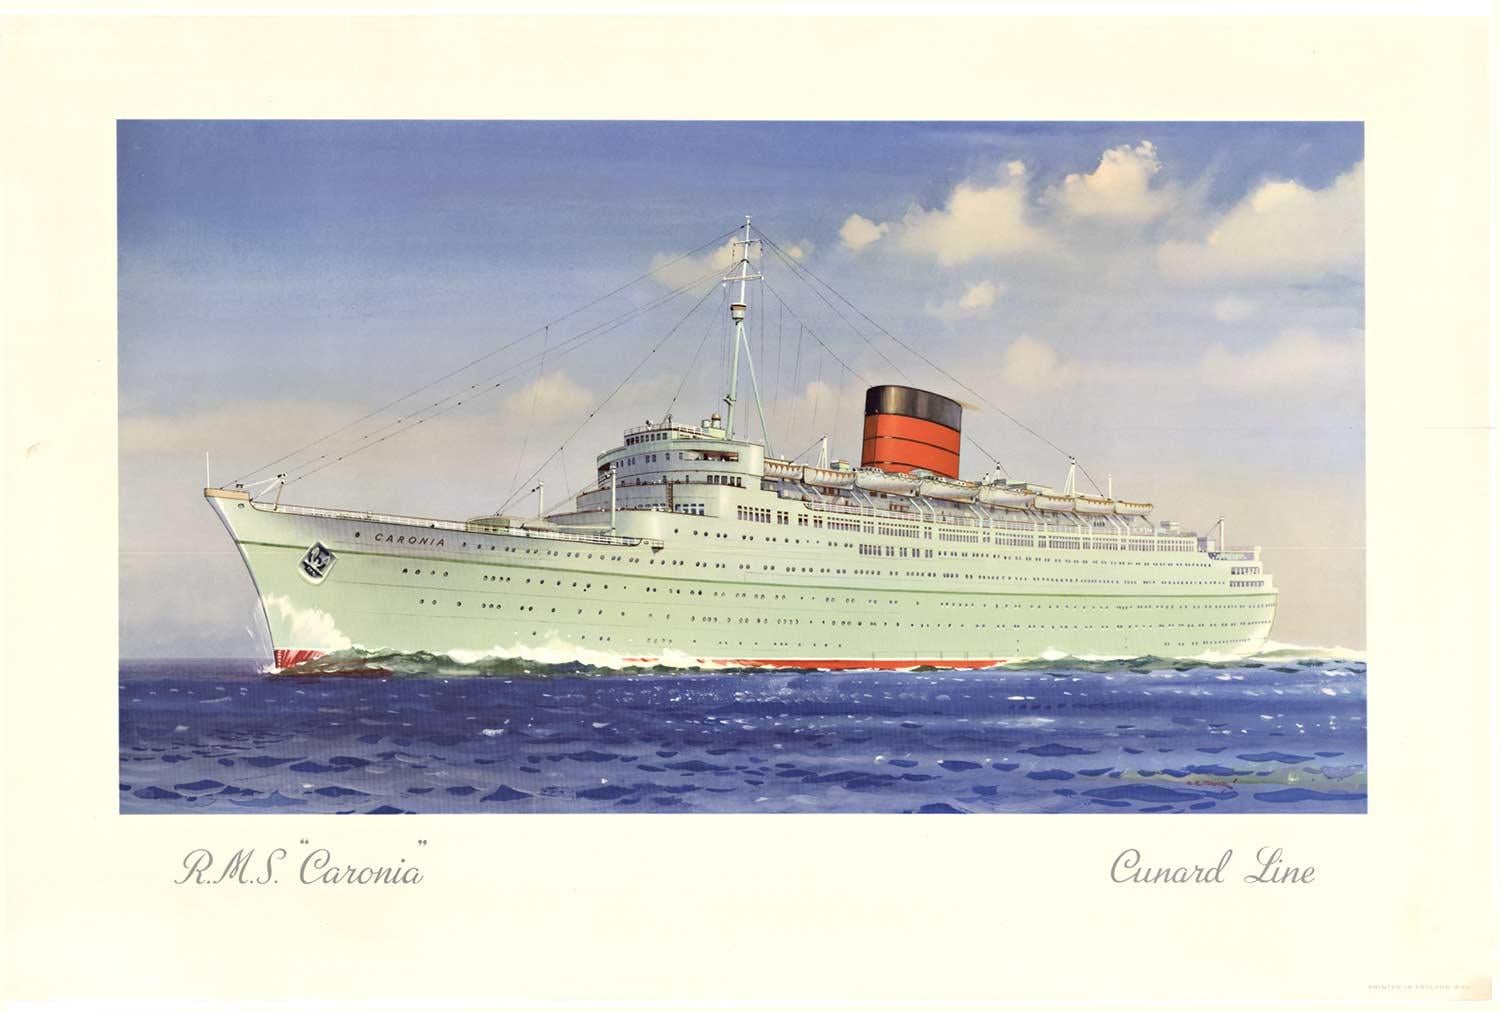 C. E. Turner Landscape Print - Original "R. M. S. Caronia, Cunard Line vintage cruise line poster